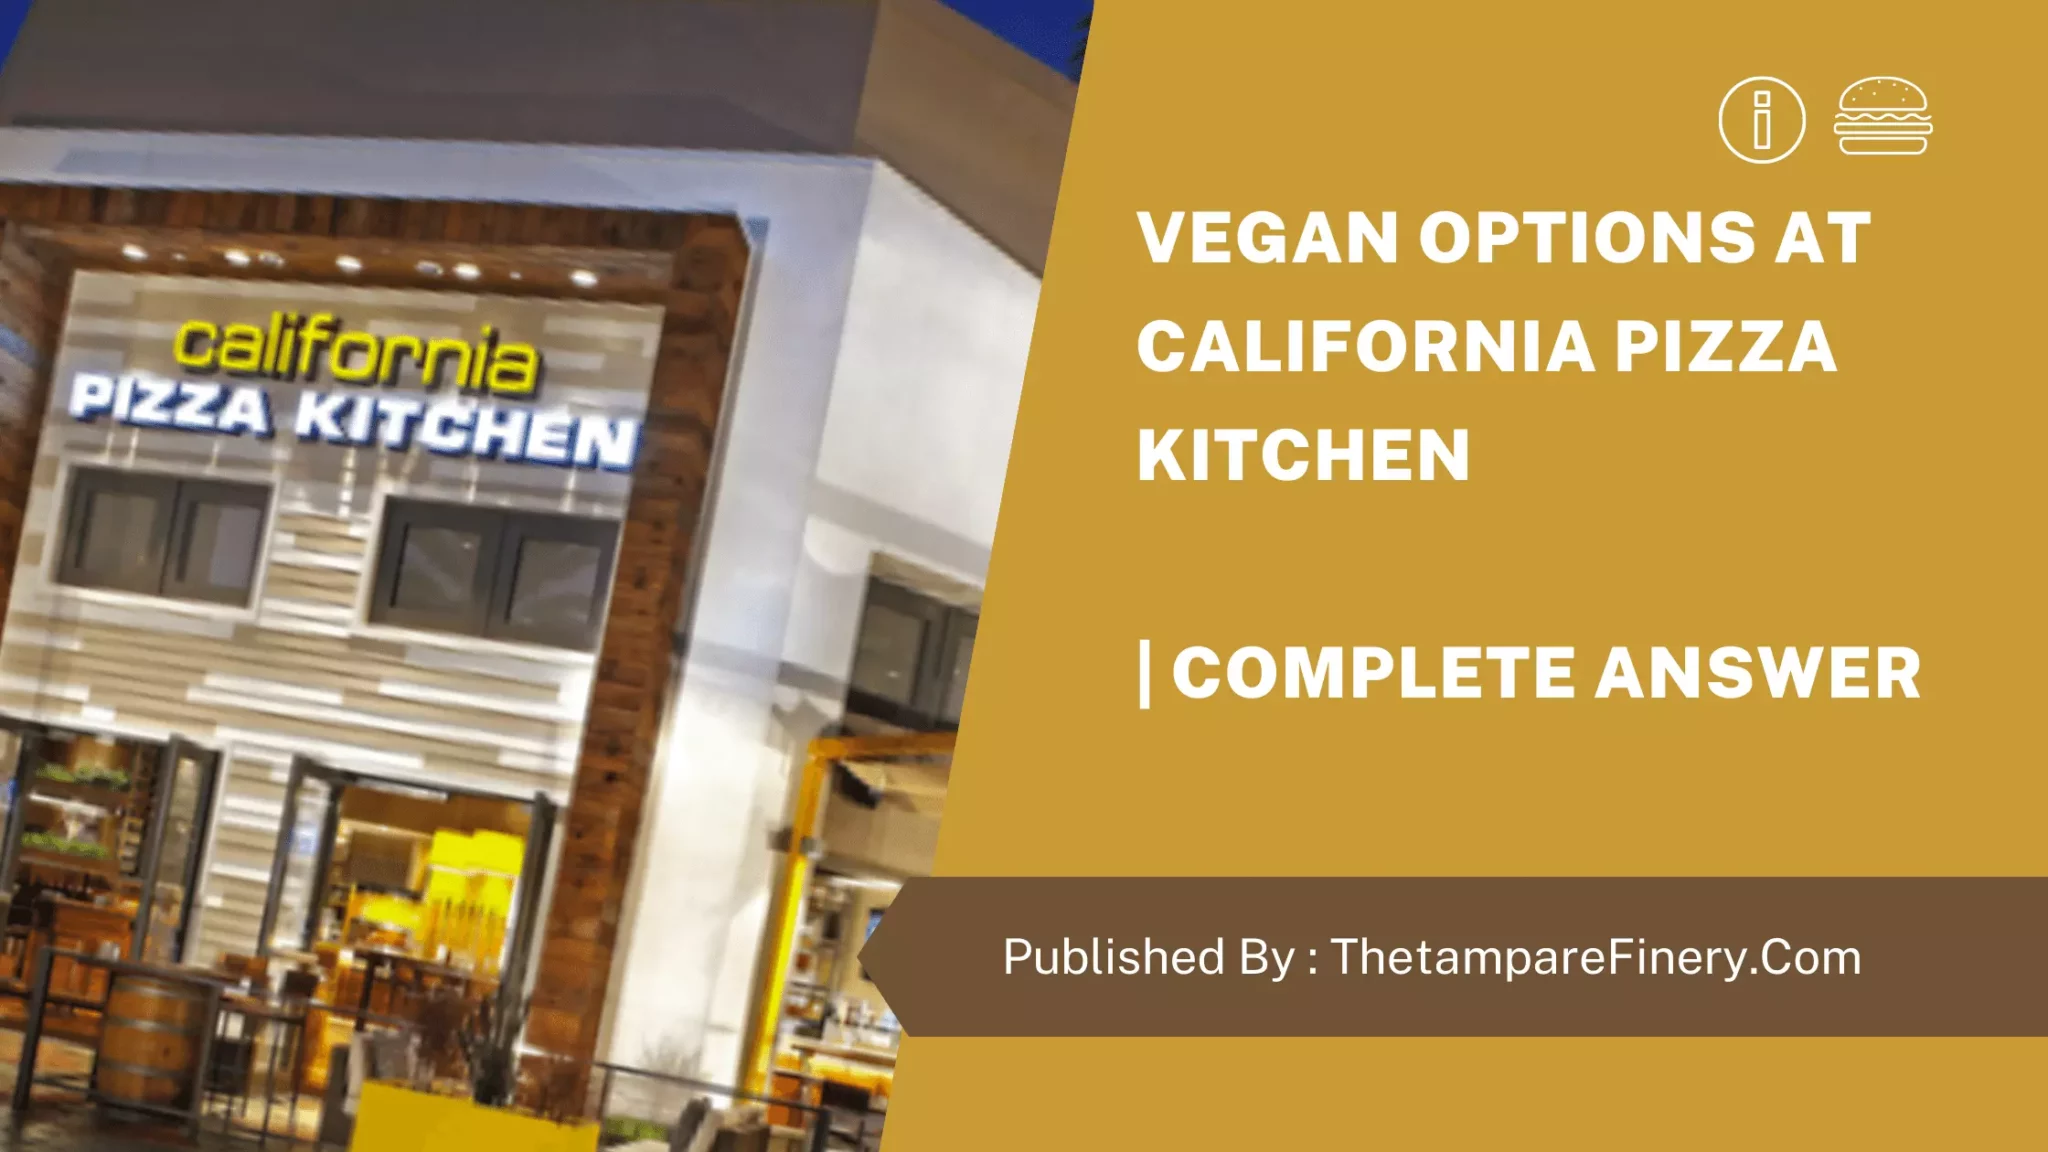 Vegan Options At California Pizza Kitchen.webp